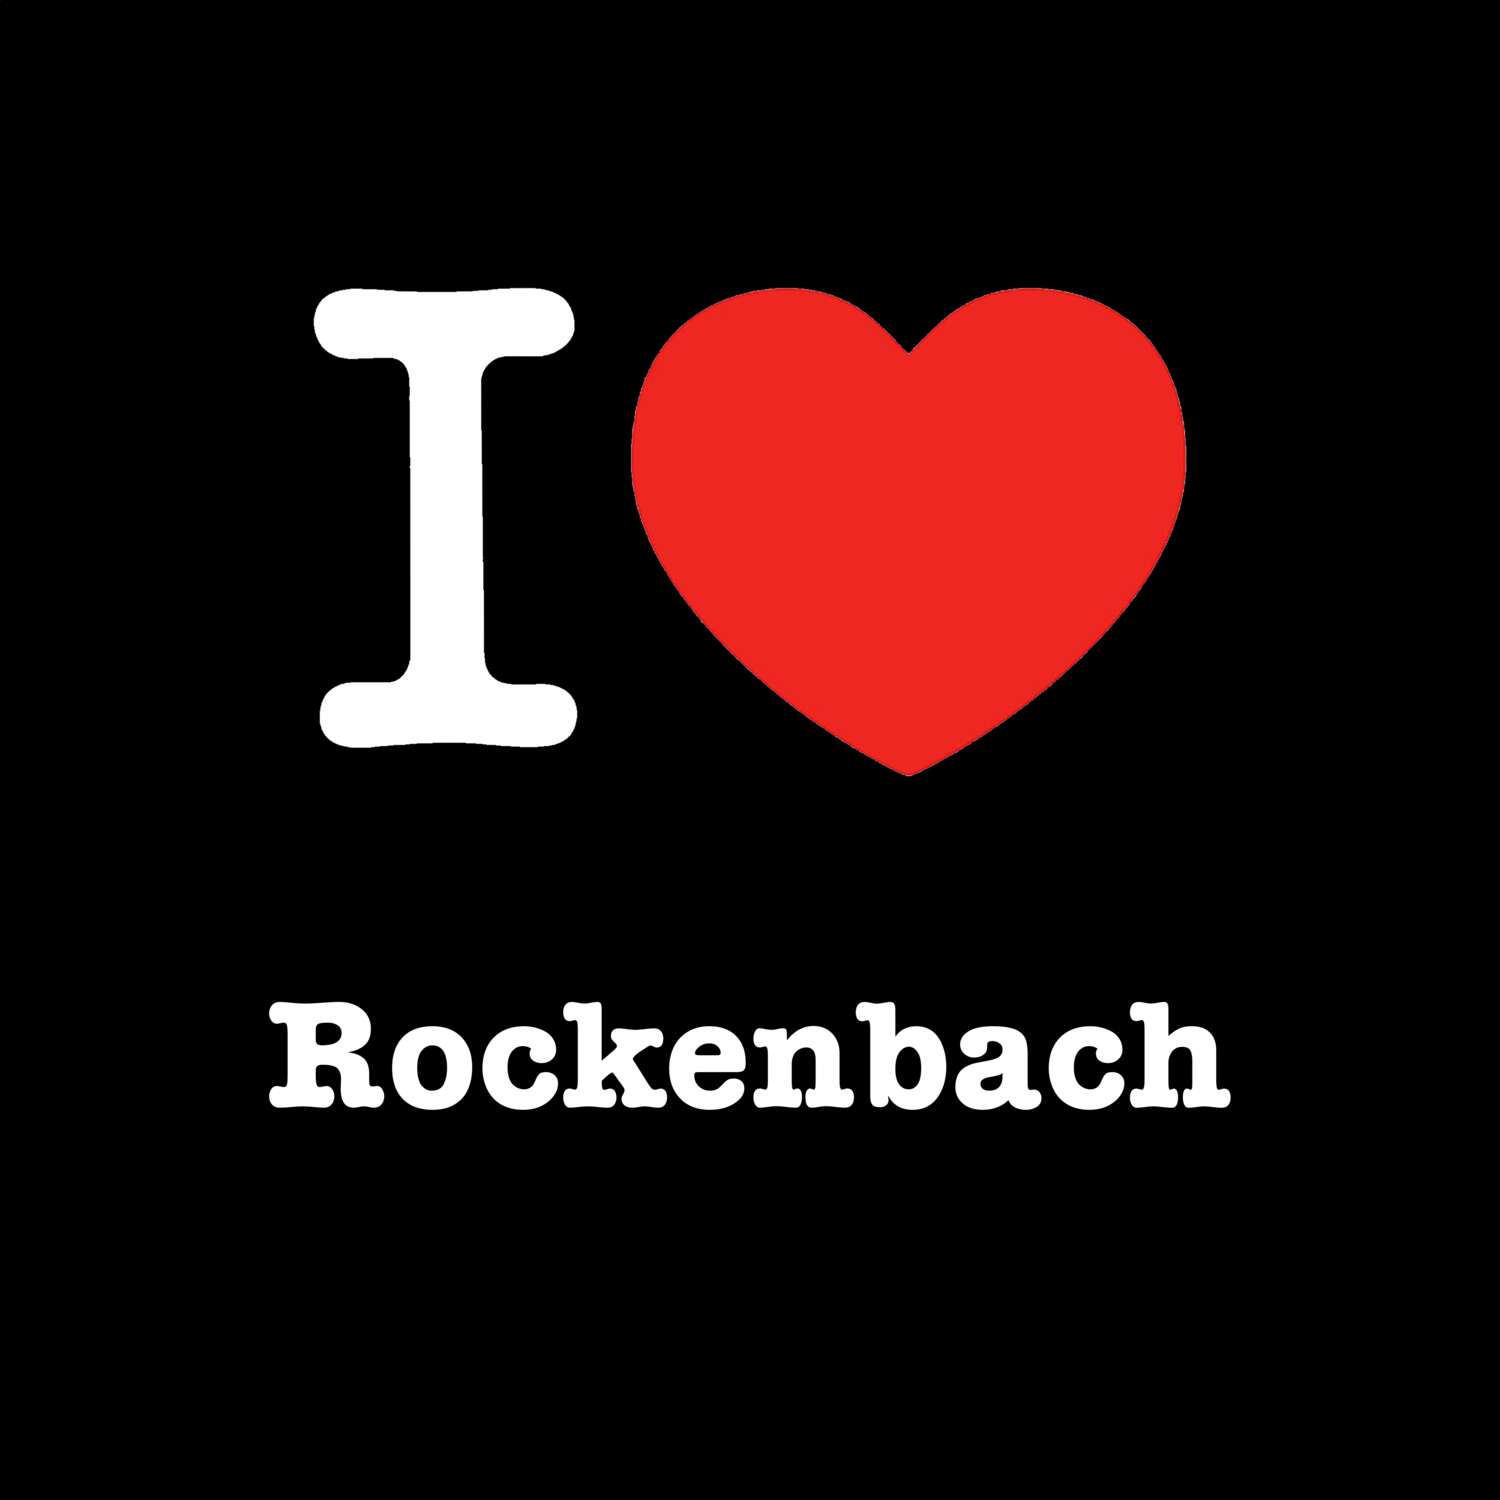 Rockenbach T-Shirt »I love«